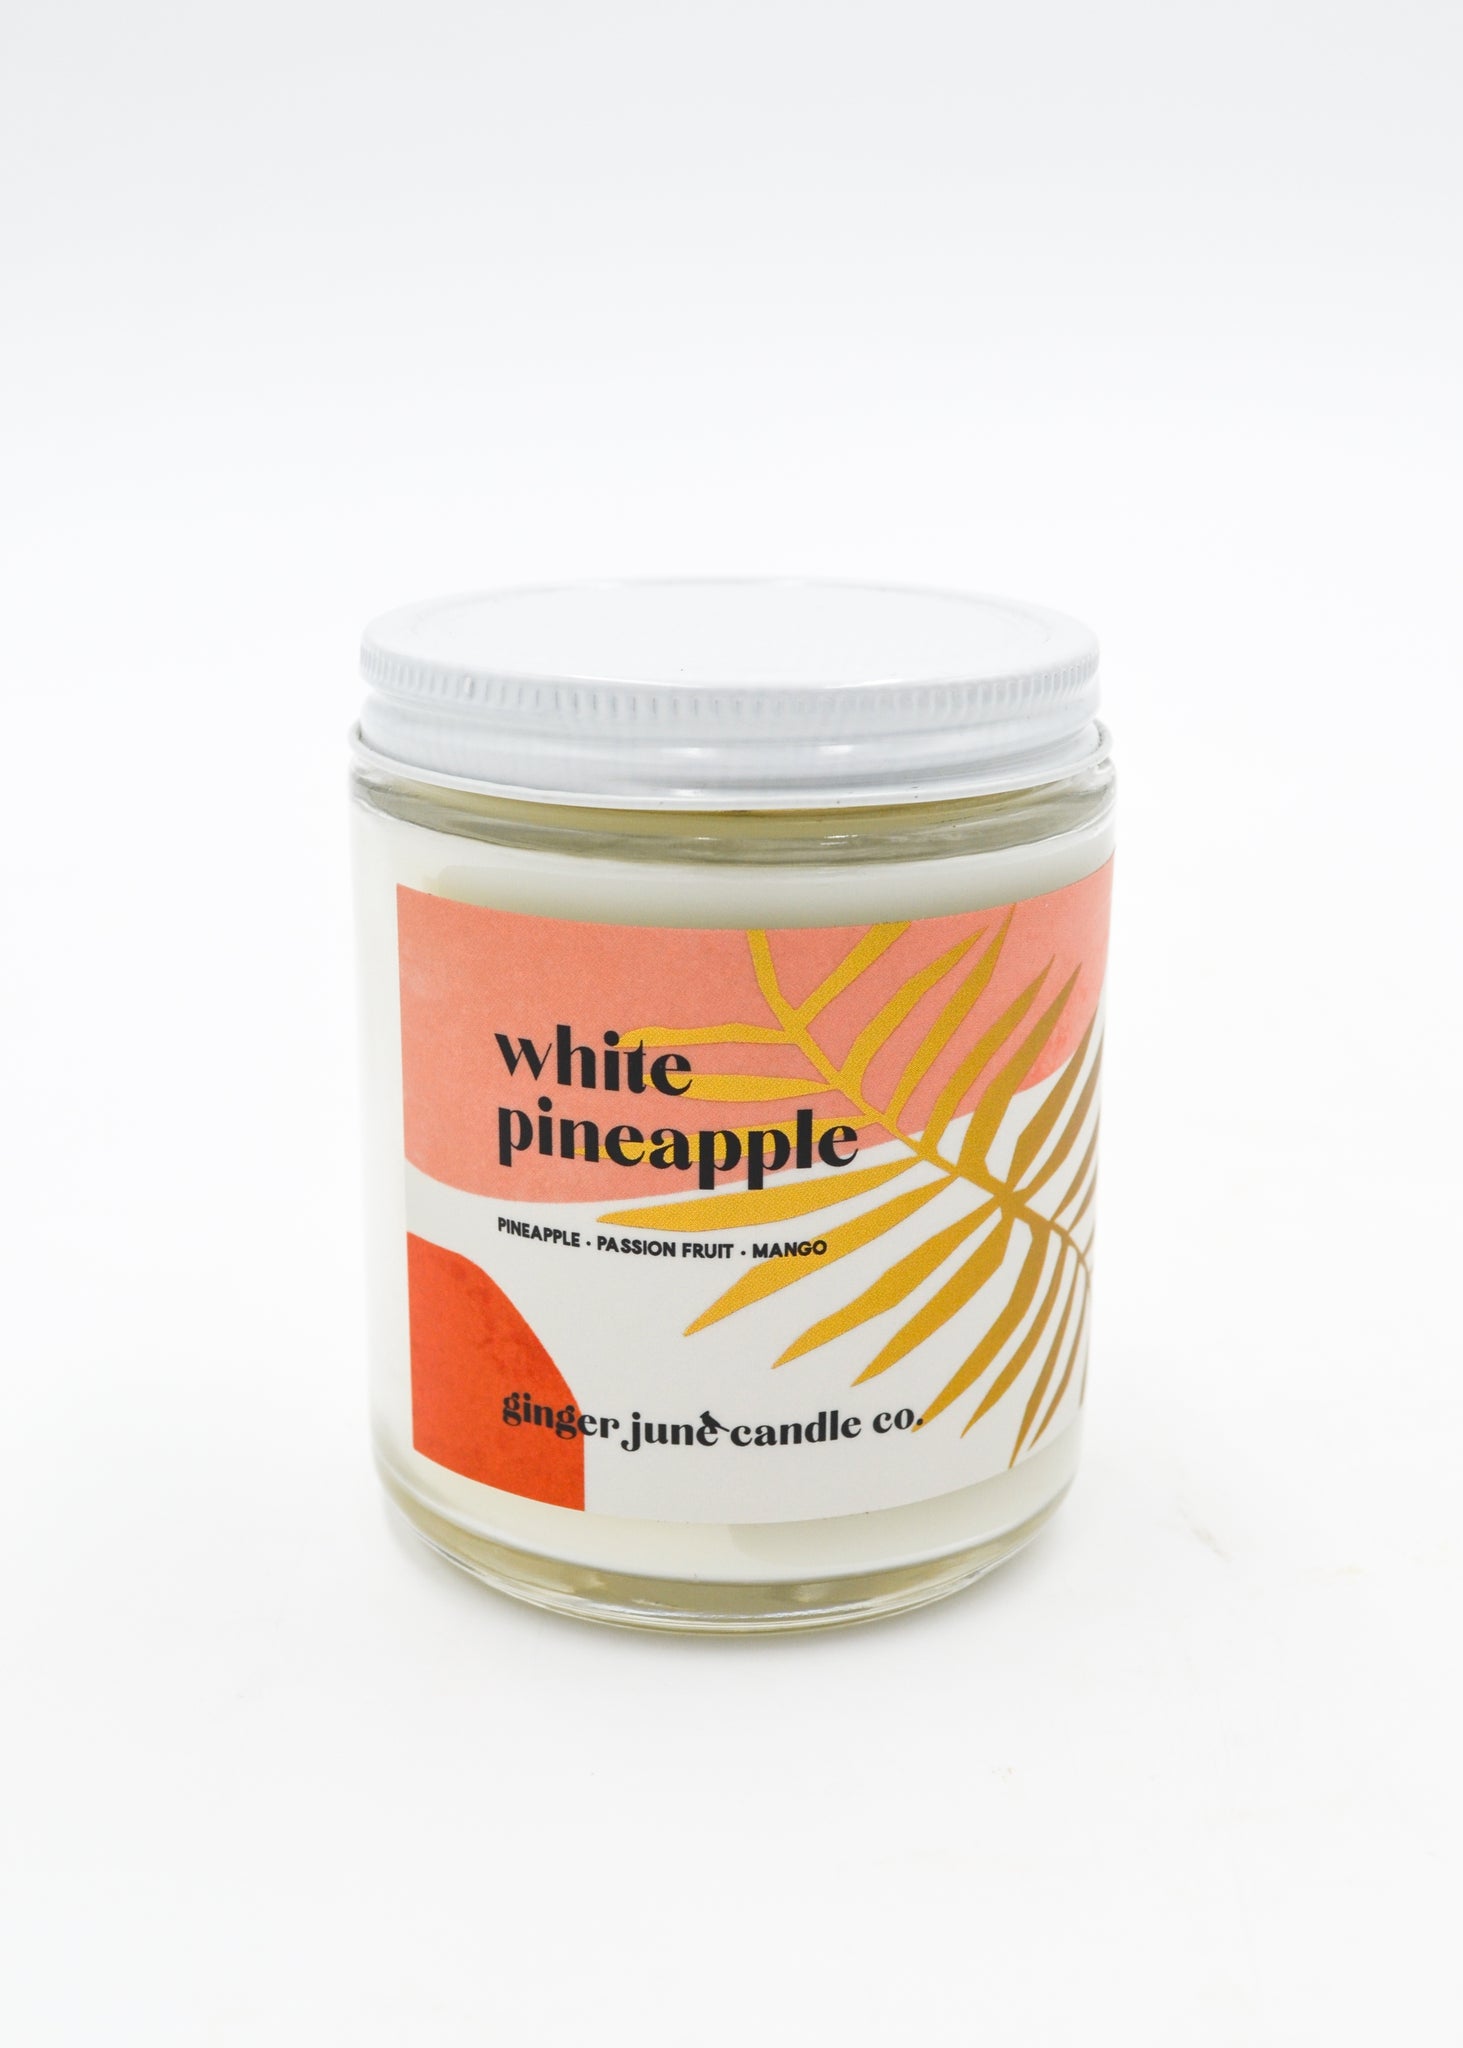 White Pineapple + Passionfruit + Mango Candle -  - Ginger June Candle Co. - Wild Lark